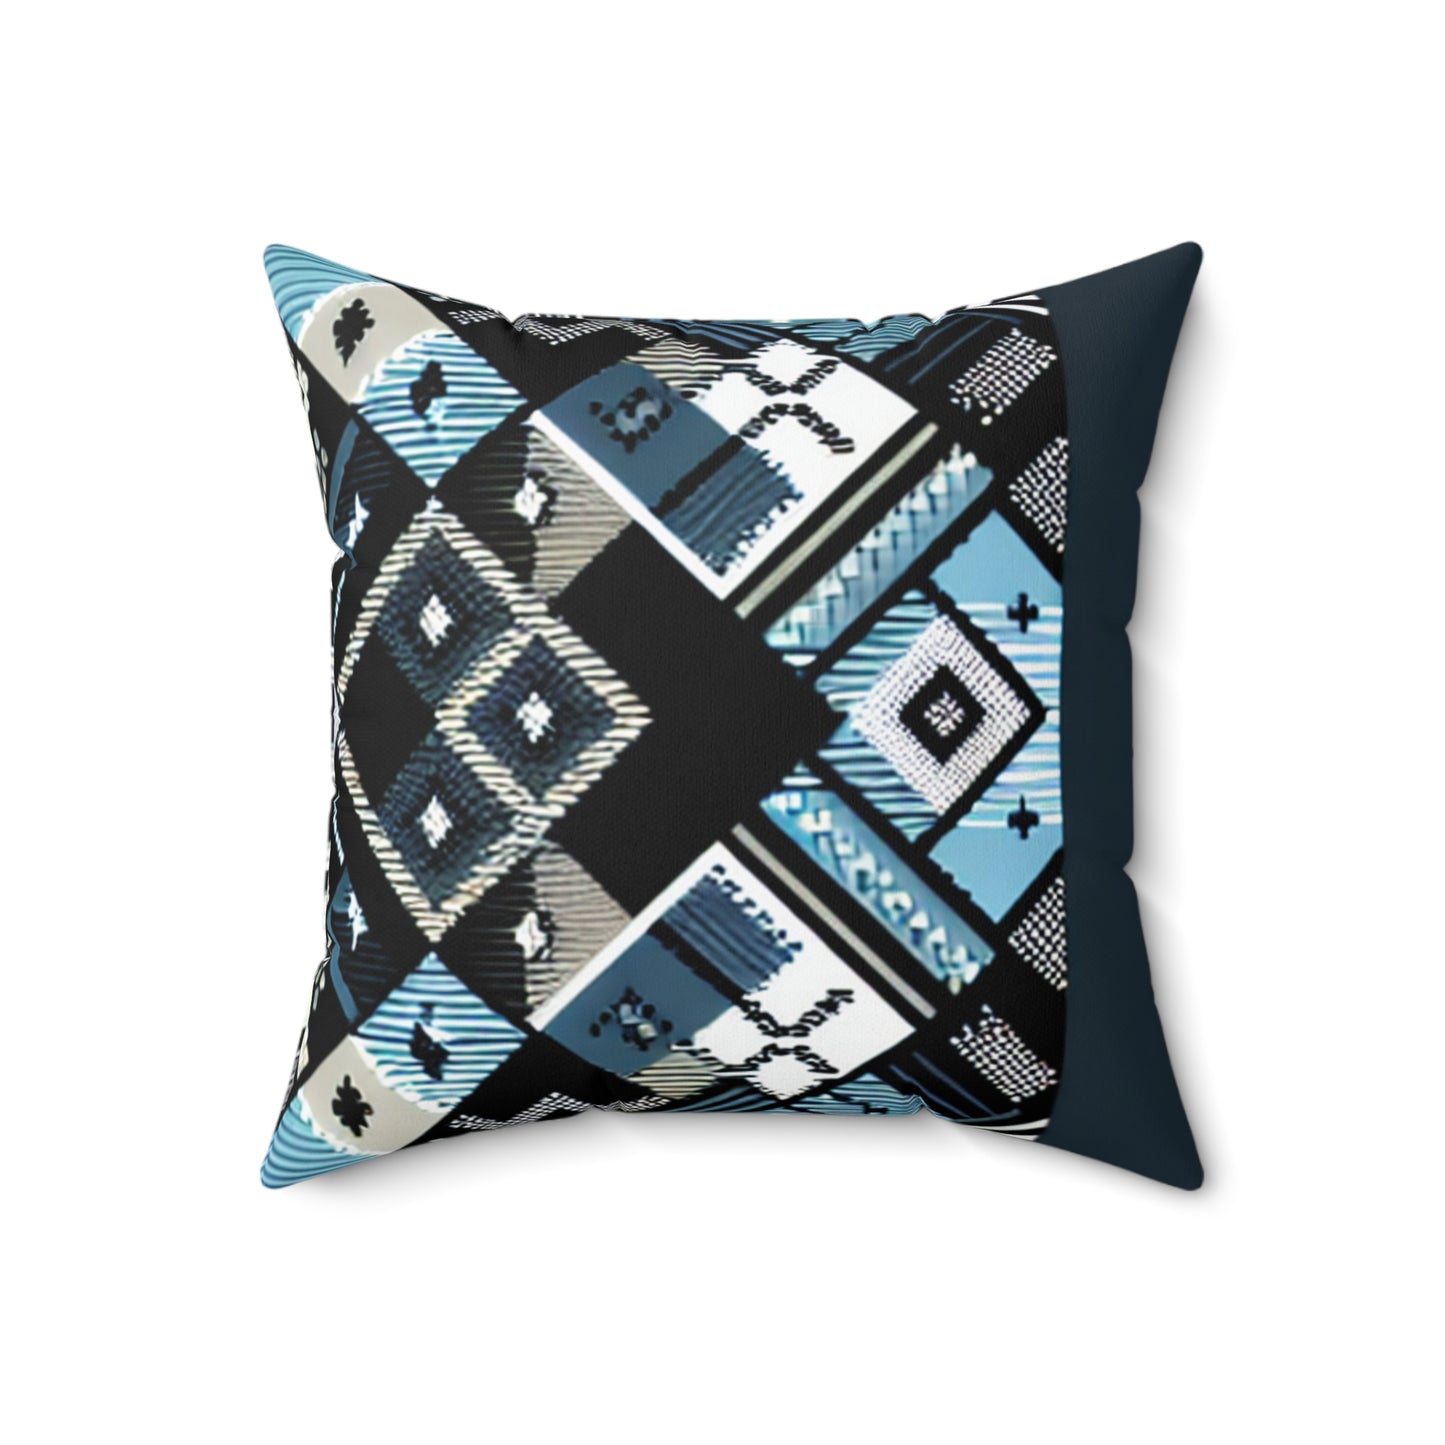 Aztec-Inspired Geometric Pillow